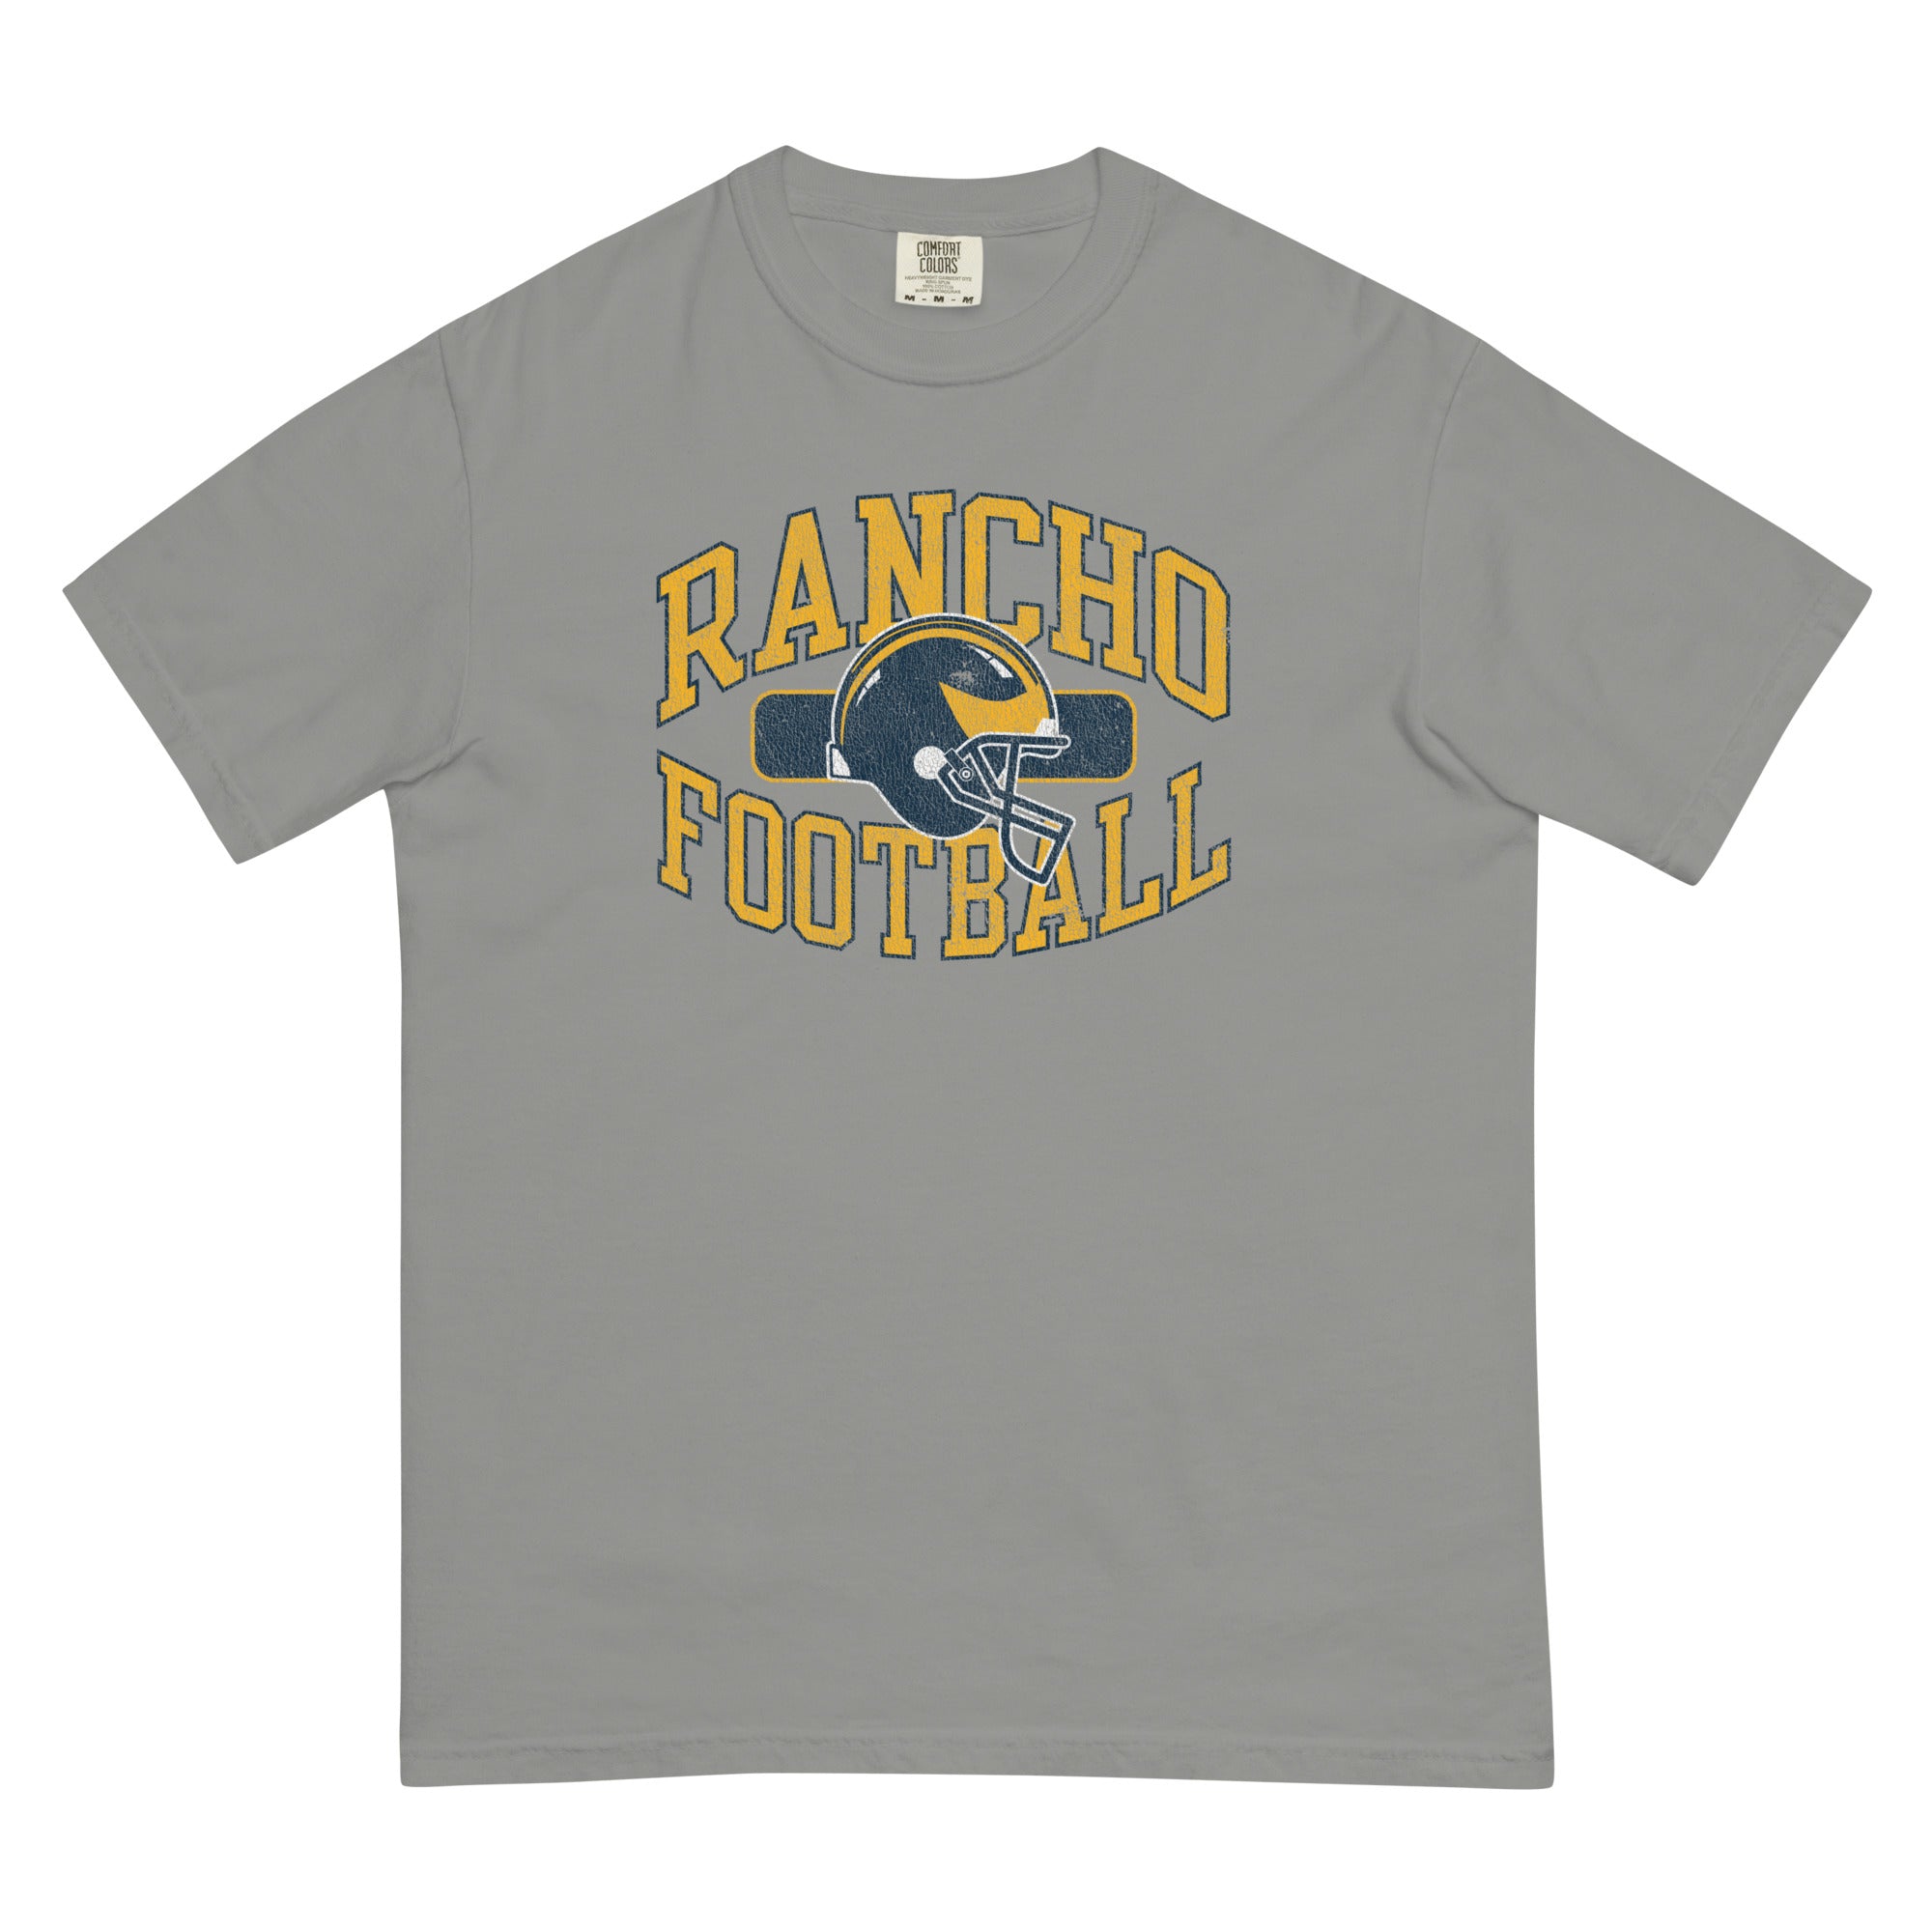 Rancho Christian Mens Garment-Dyed Heavyweight T-Shirt